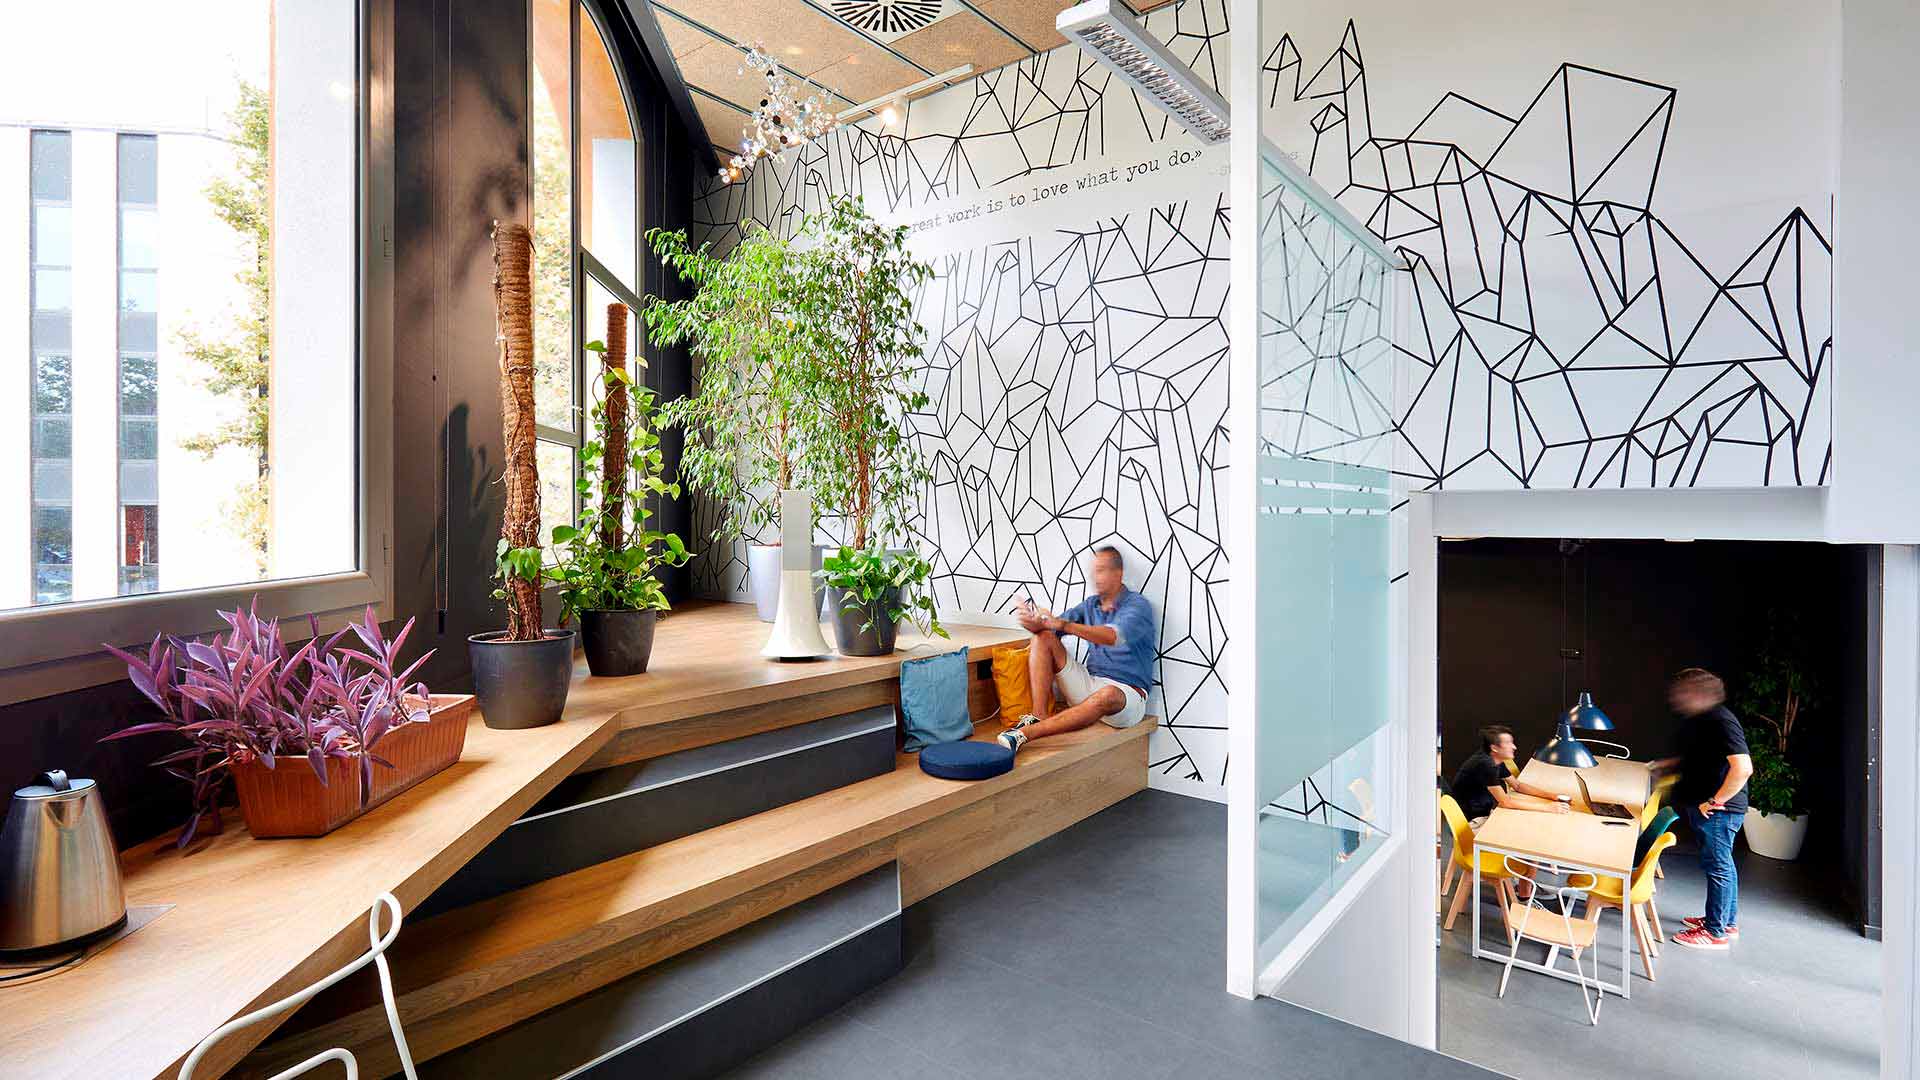 Swarovski corporate offices, design project by Grup Idea in Barcelona